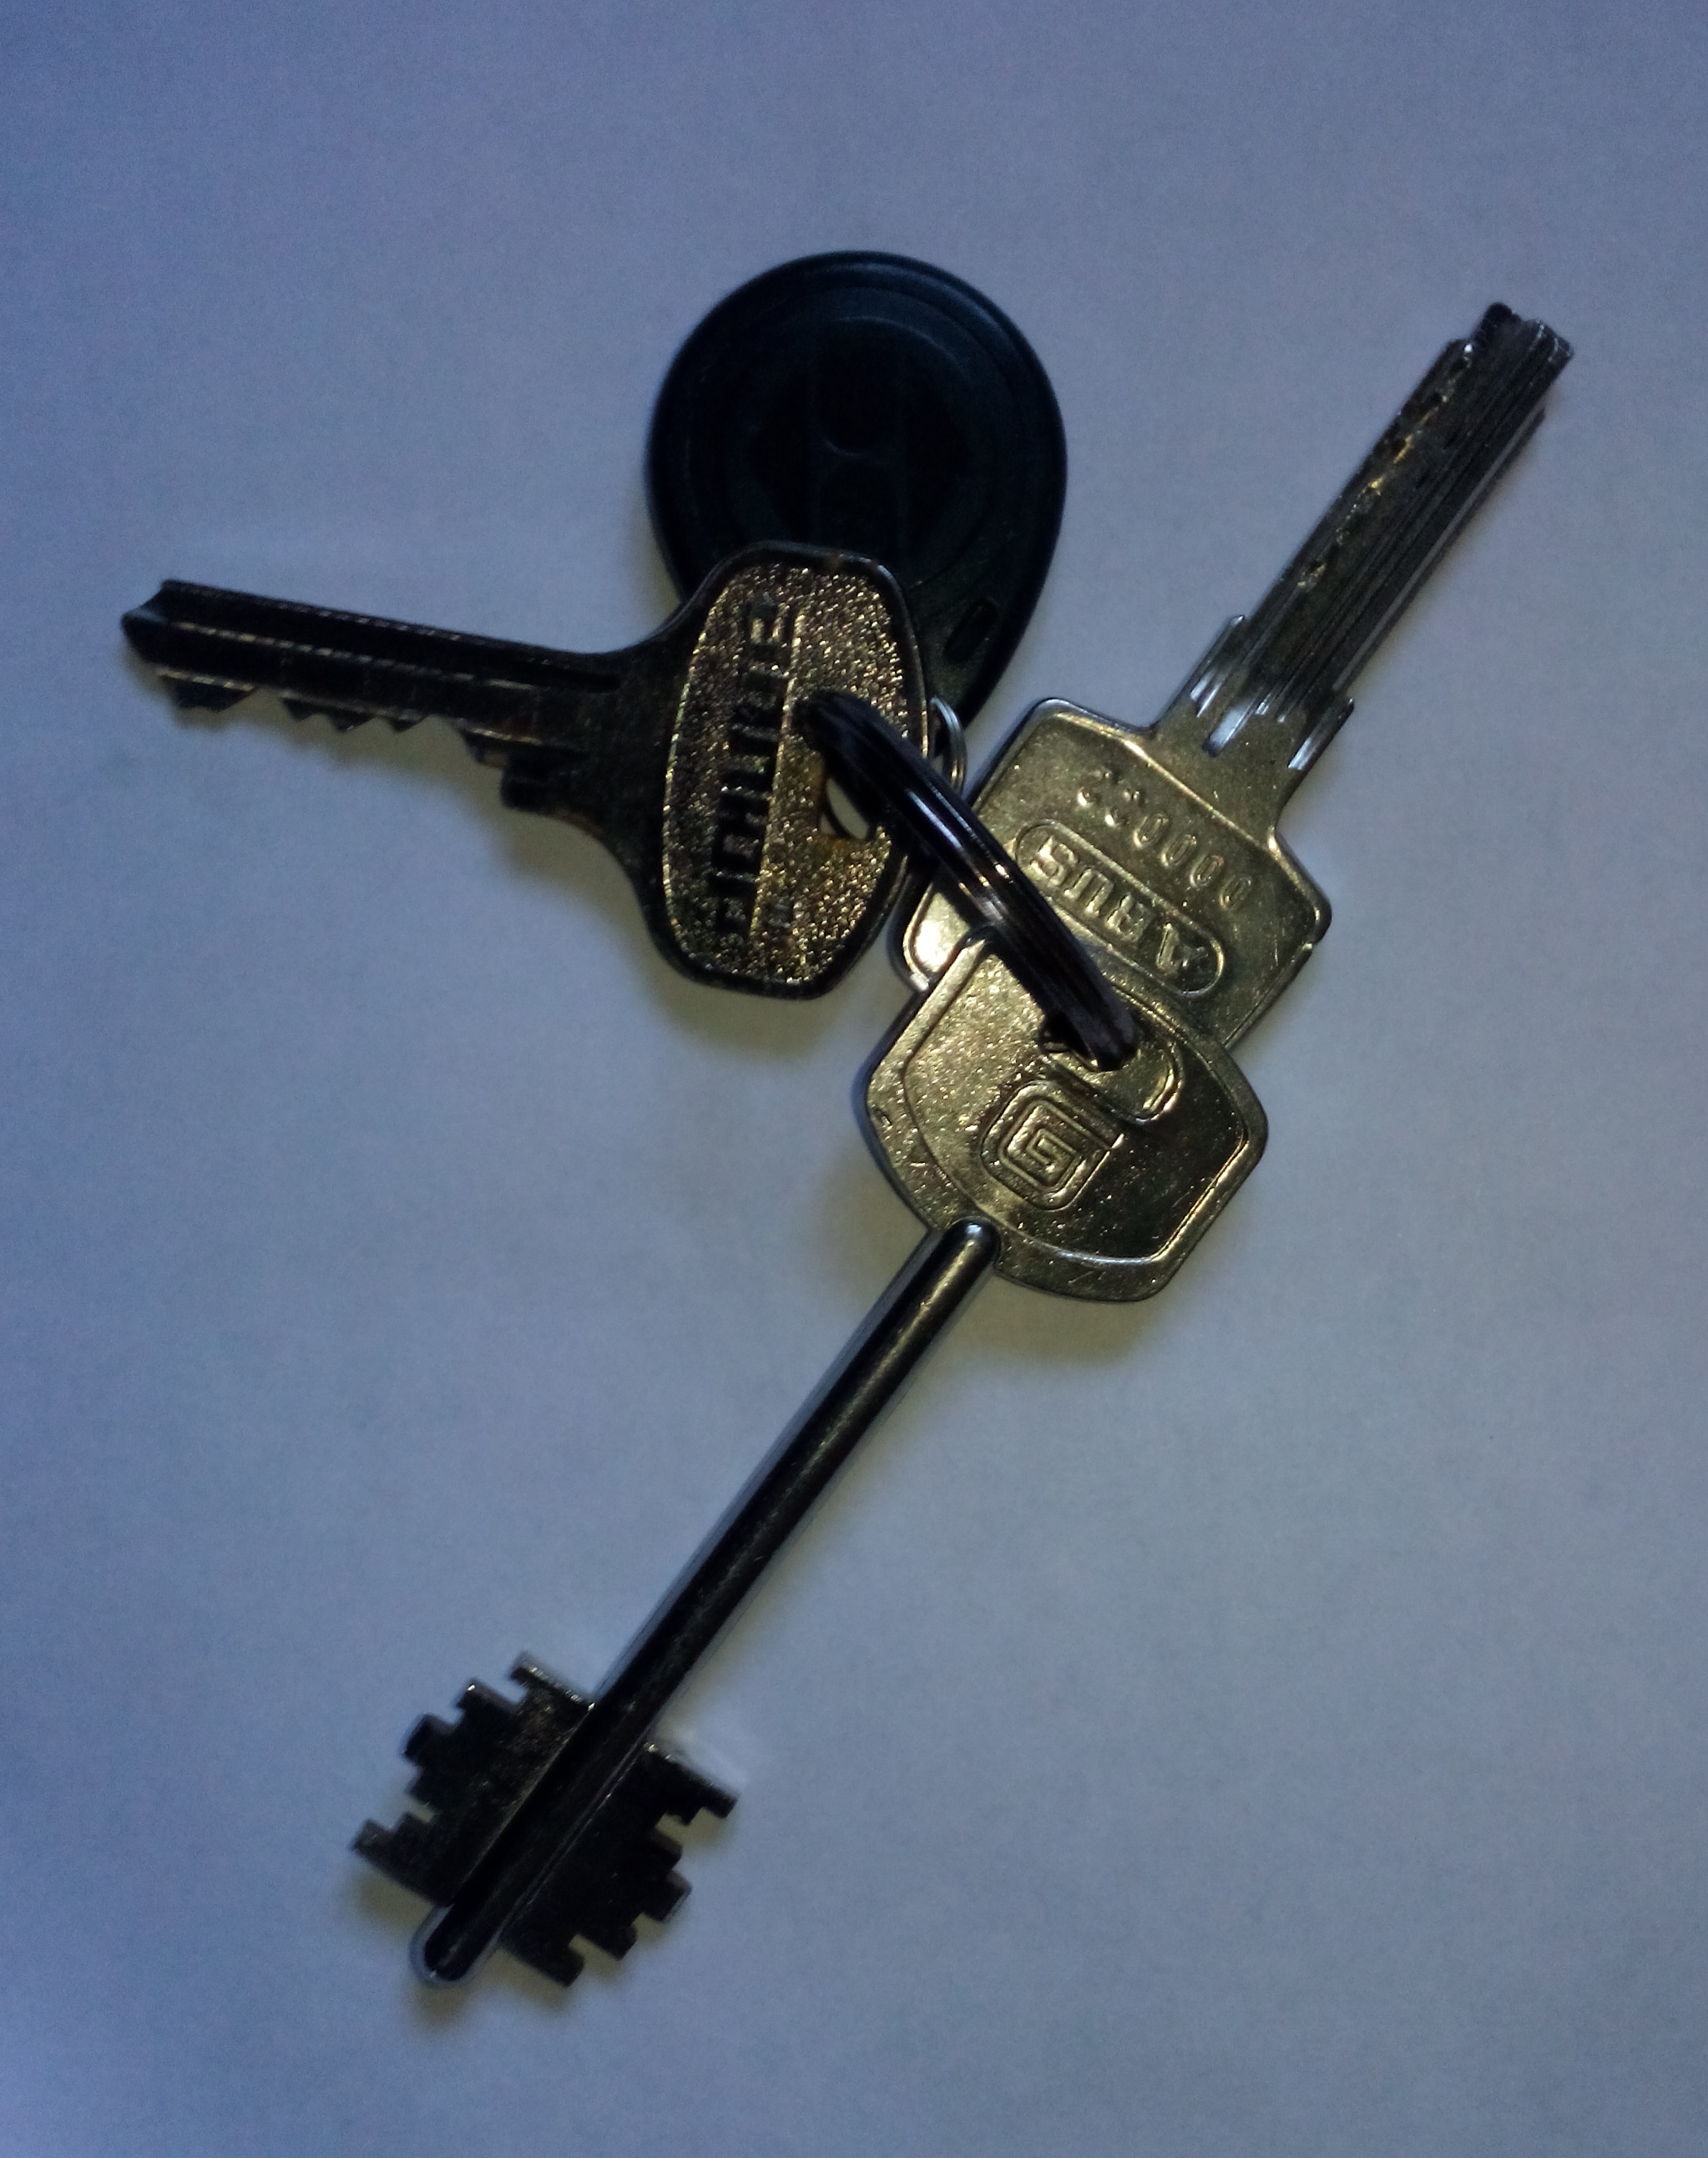 Спб ключ сайт. Найдены ключи. Найдены ключи с печатью. Найдены ключи СПБ. Найдены ключи от квартиры.